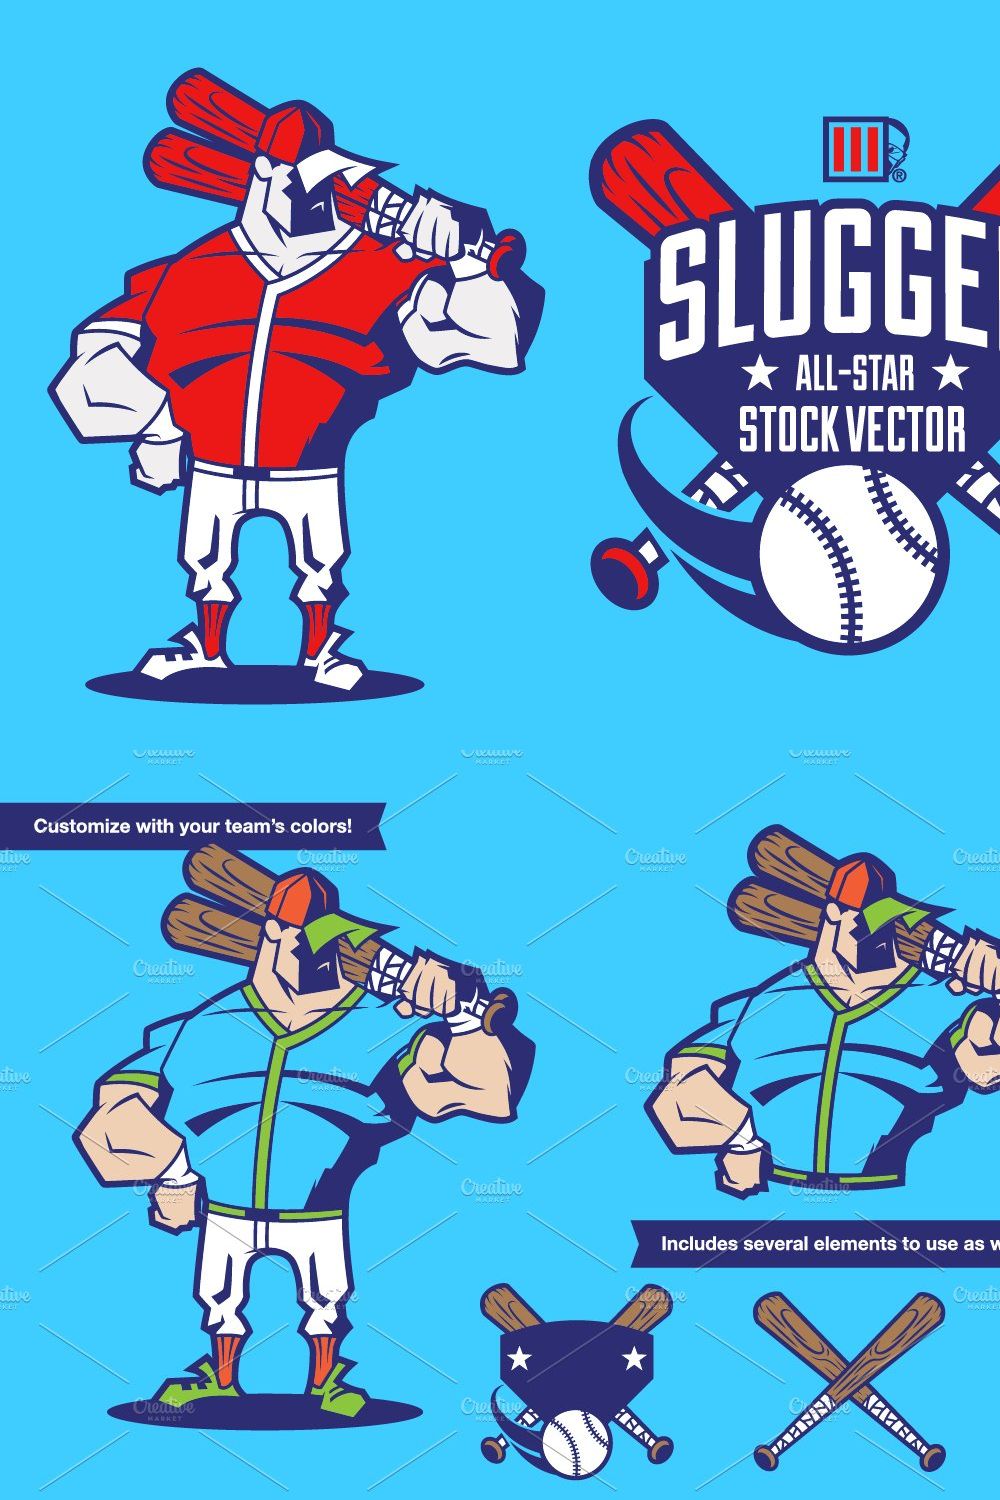 Slugger Stock Vector pinterest preview image.